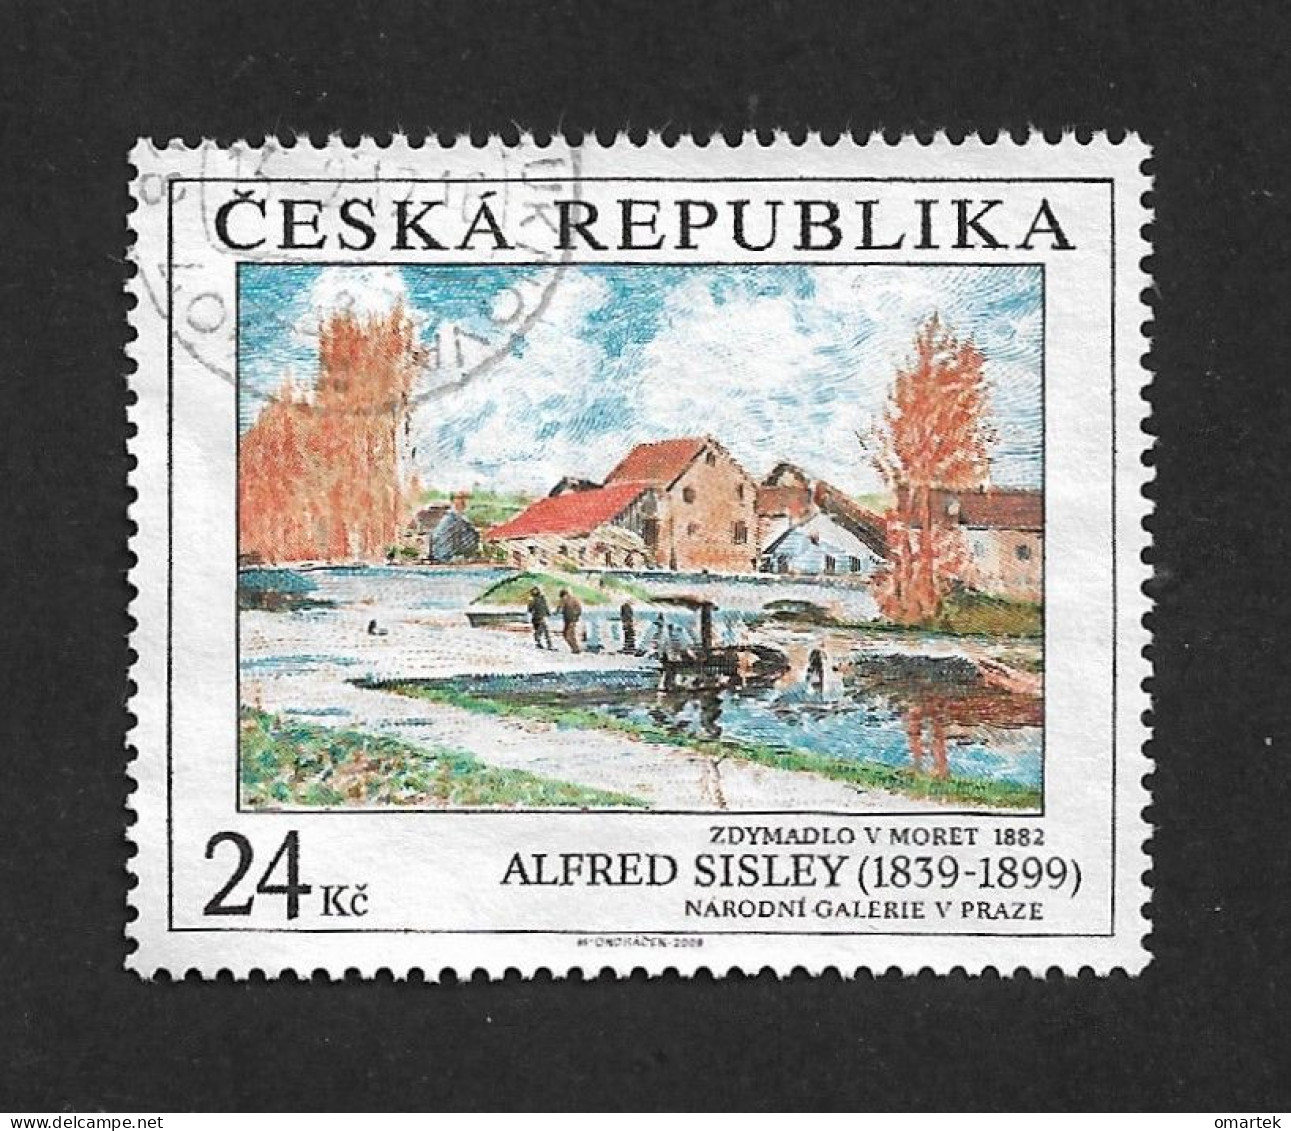 Czech Republic 2009 ⊙ Mi 614 Sc 3435 Alfred Sisley. Art Painting. Tschechische Republik. C3 - Usados